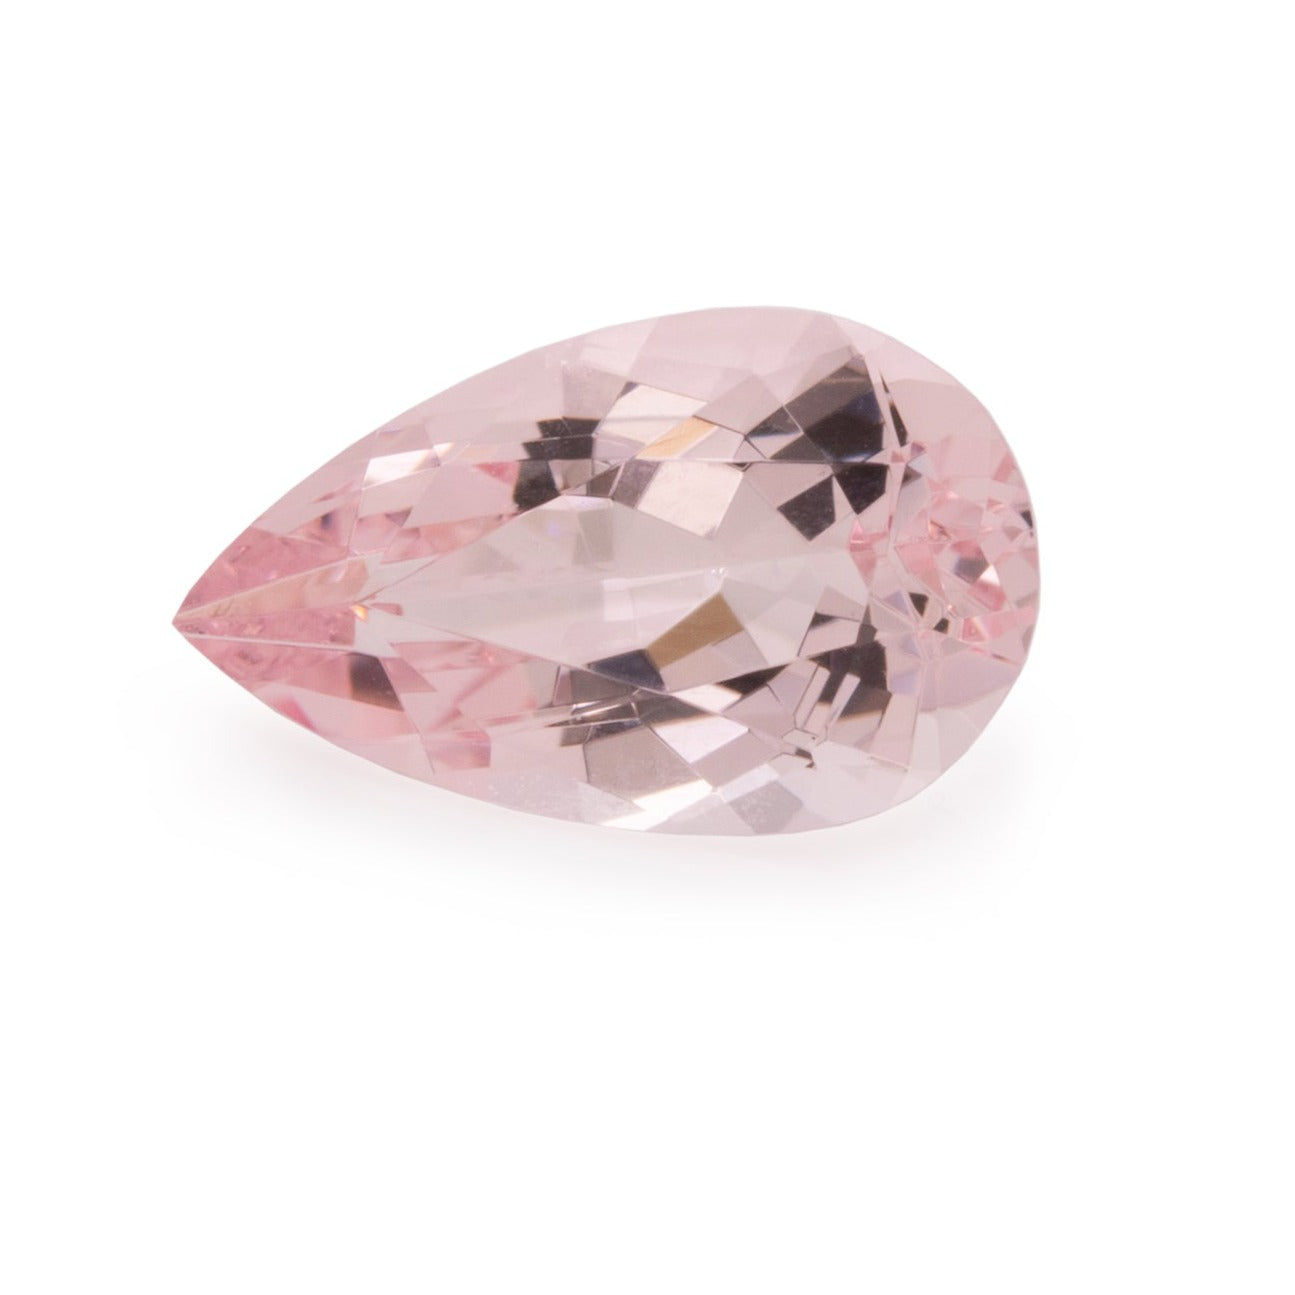 Morganite - pink, pearshape, 10x6 mm, 1.30-1.40 cts, No. MO50001